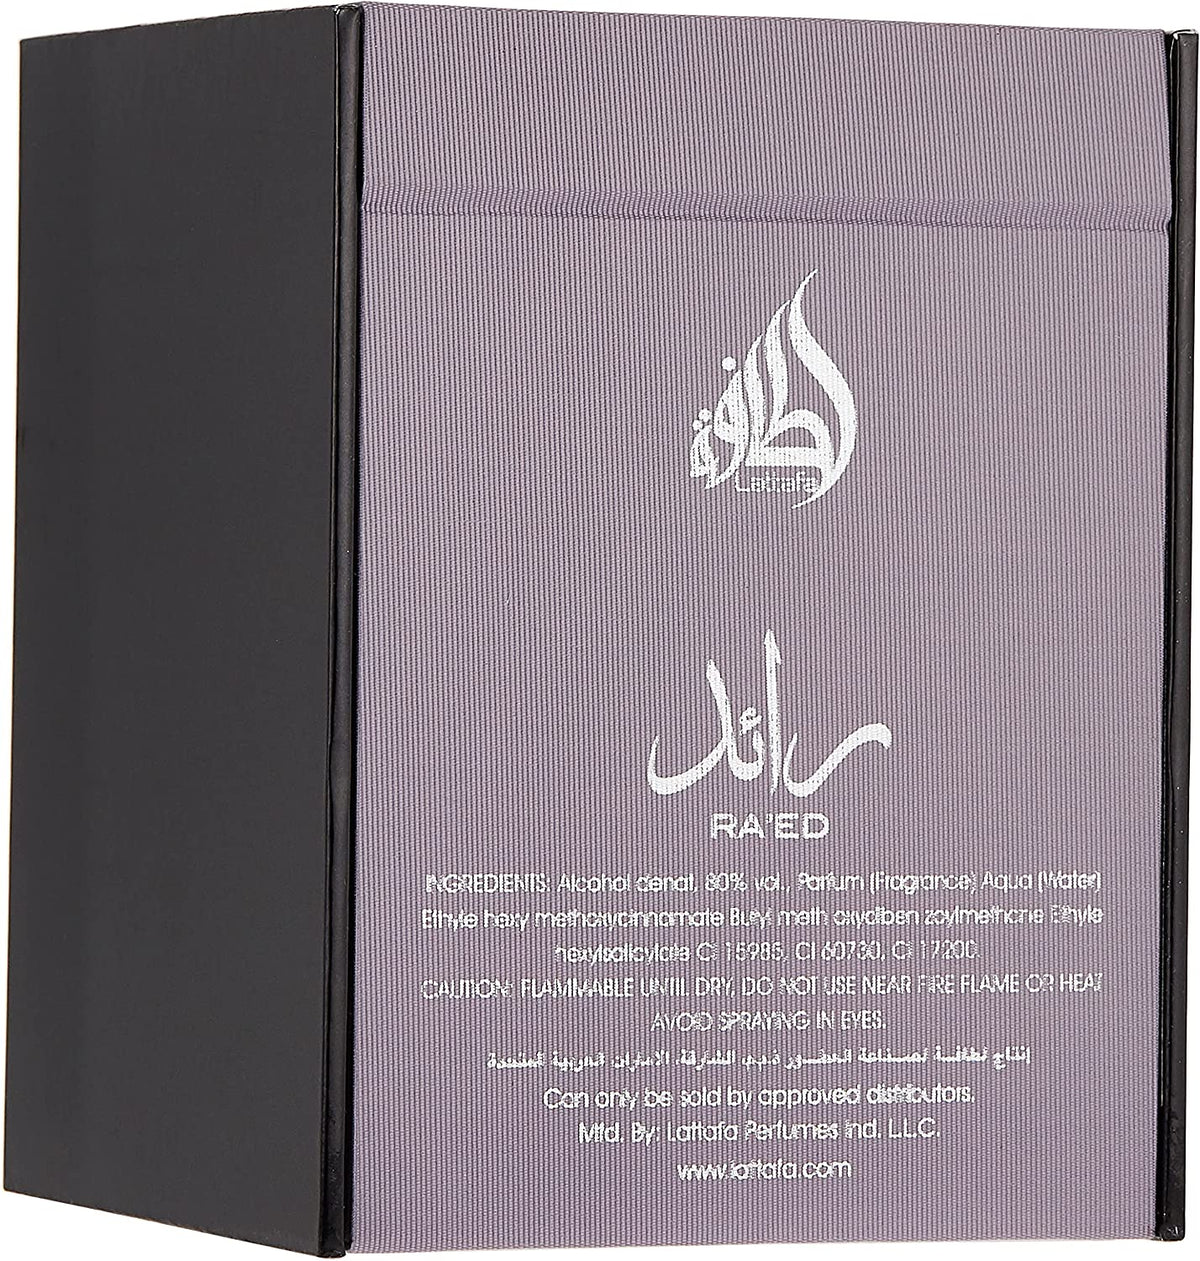 Ra'ed Silver Lattafa Perfumes for Unisex- Eau de Parfum - 100ml